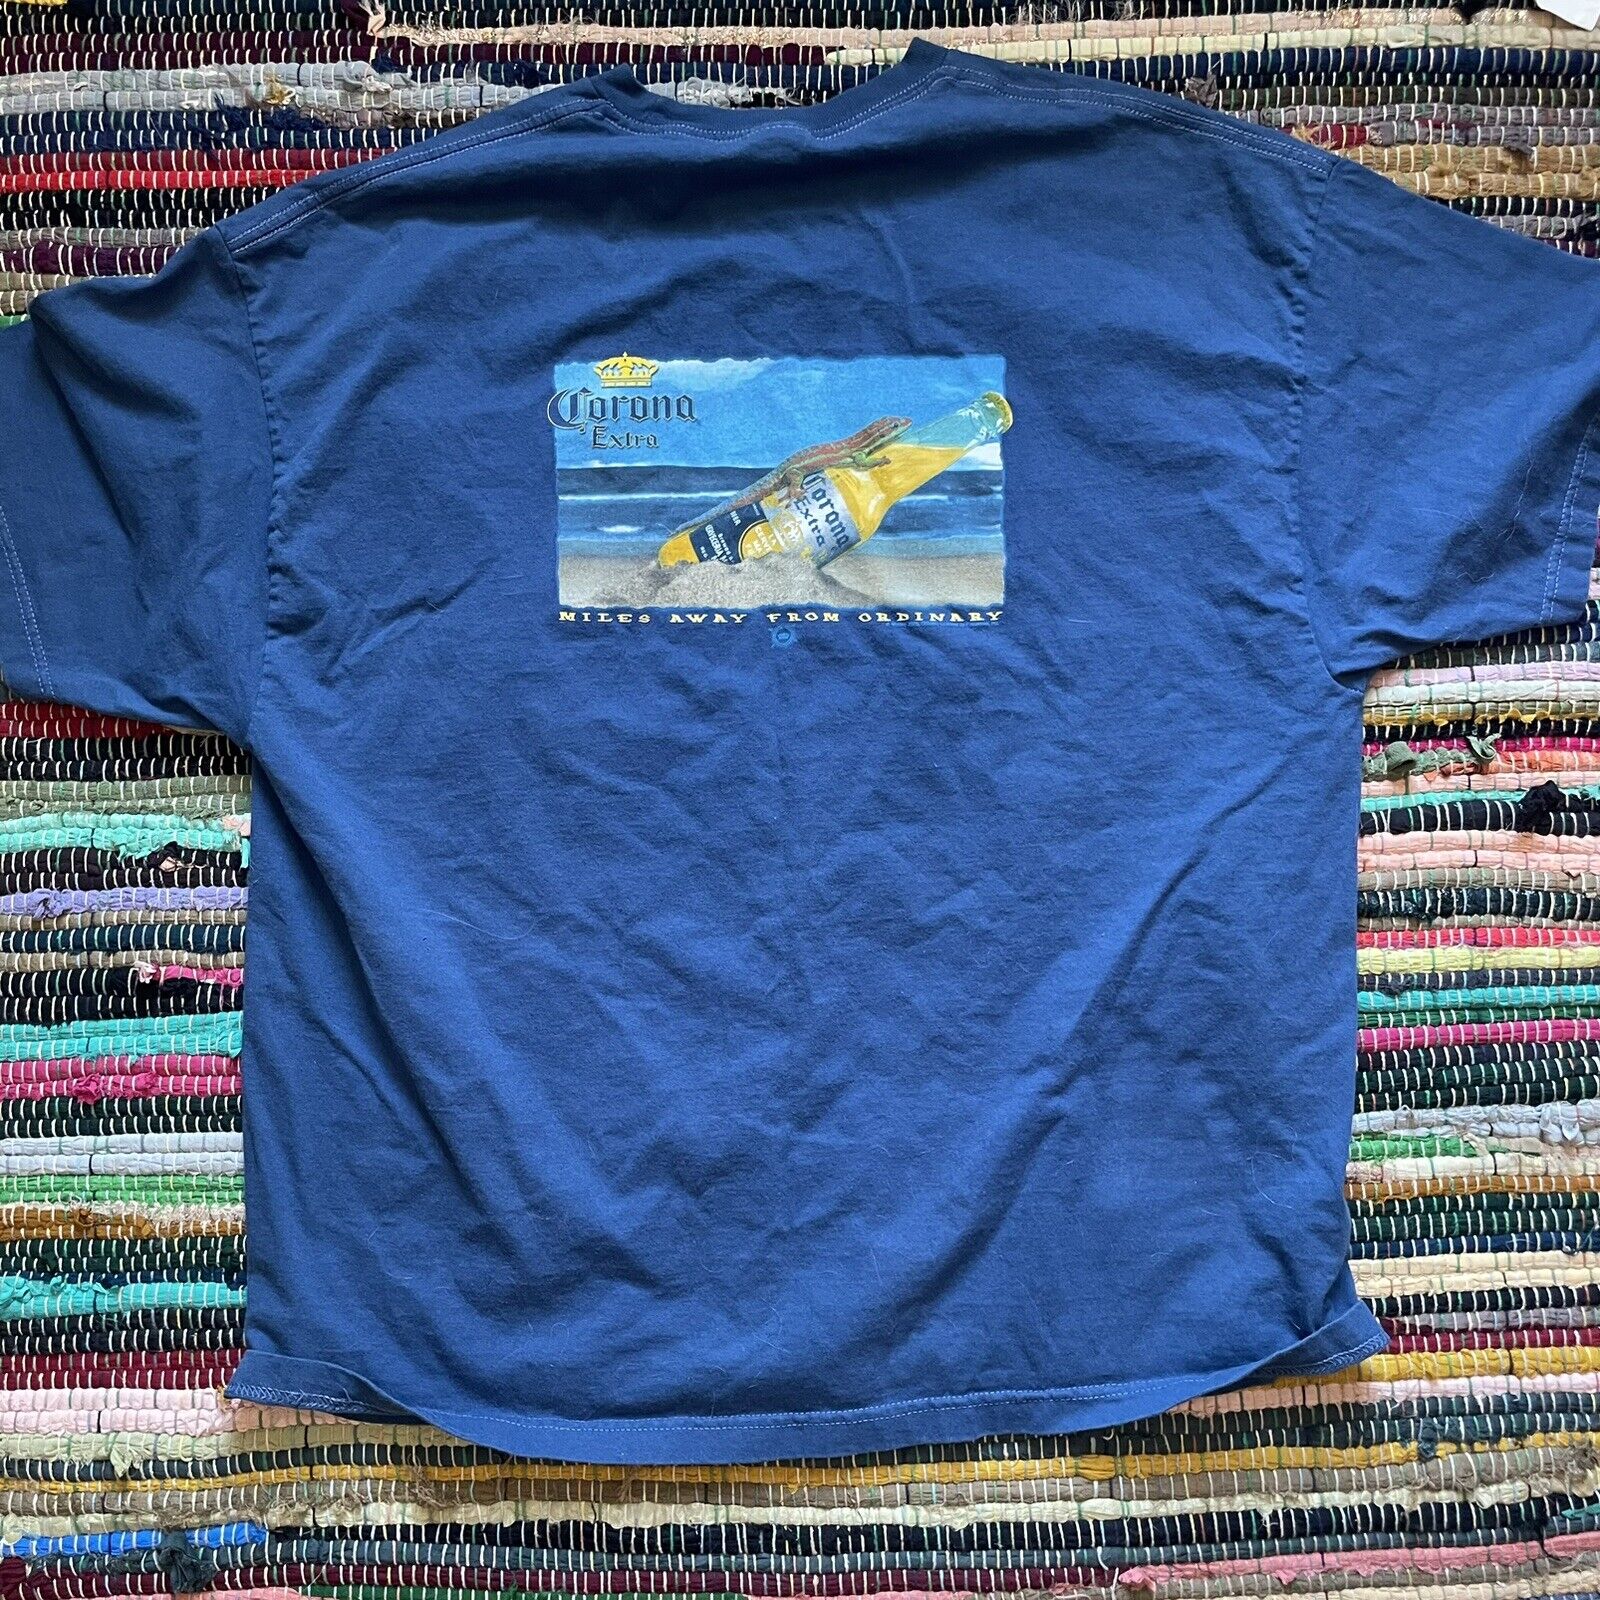 Vintage 2004 Corona Extra blue “Miles away from ordinary” lizard 3xl t-shirt